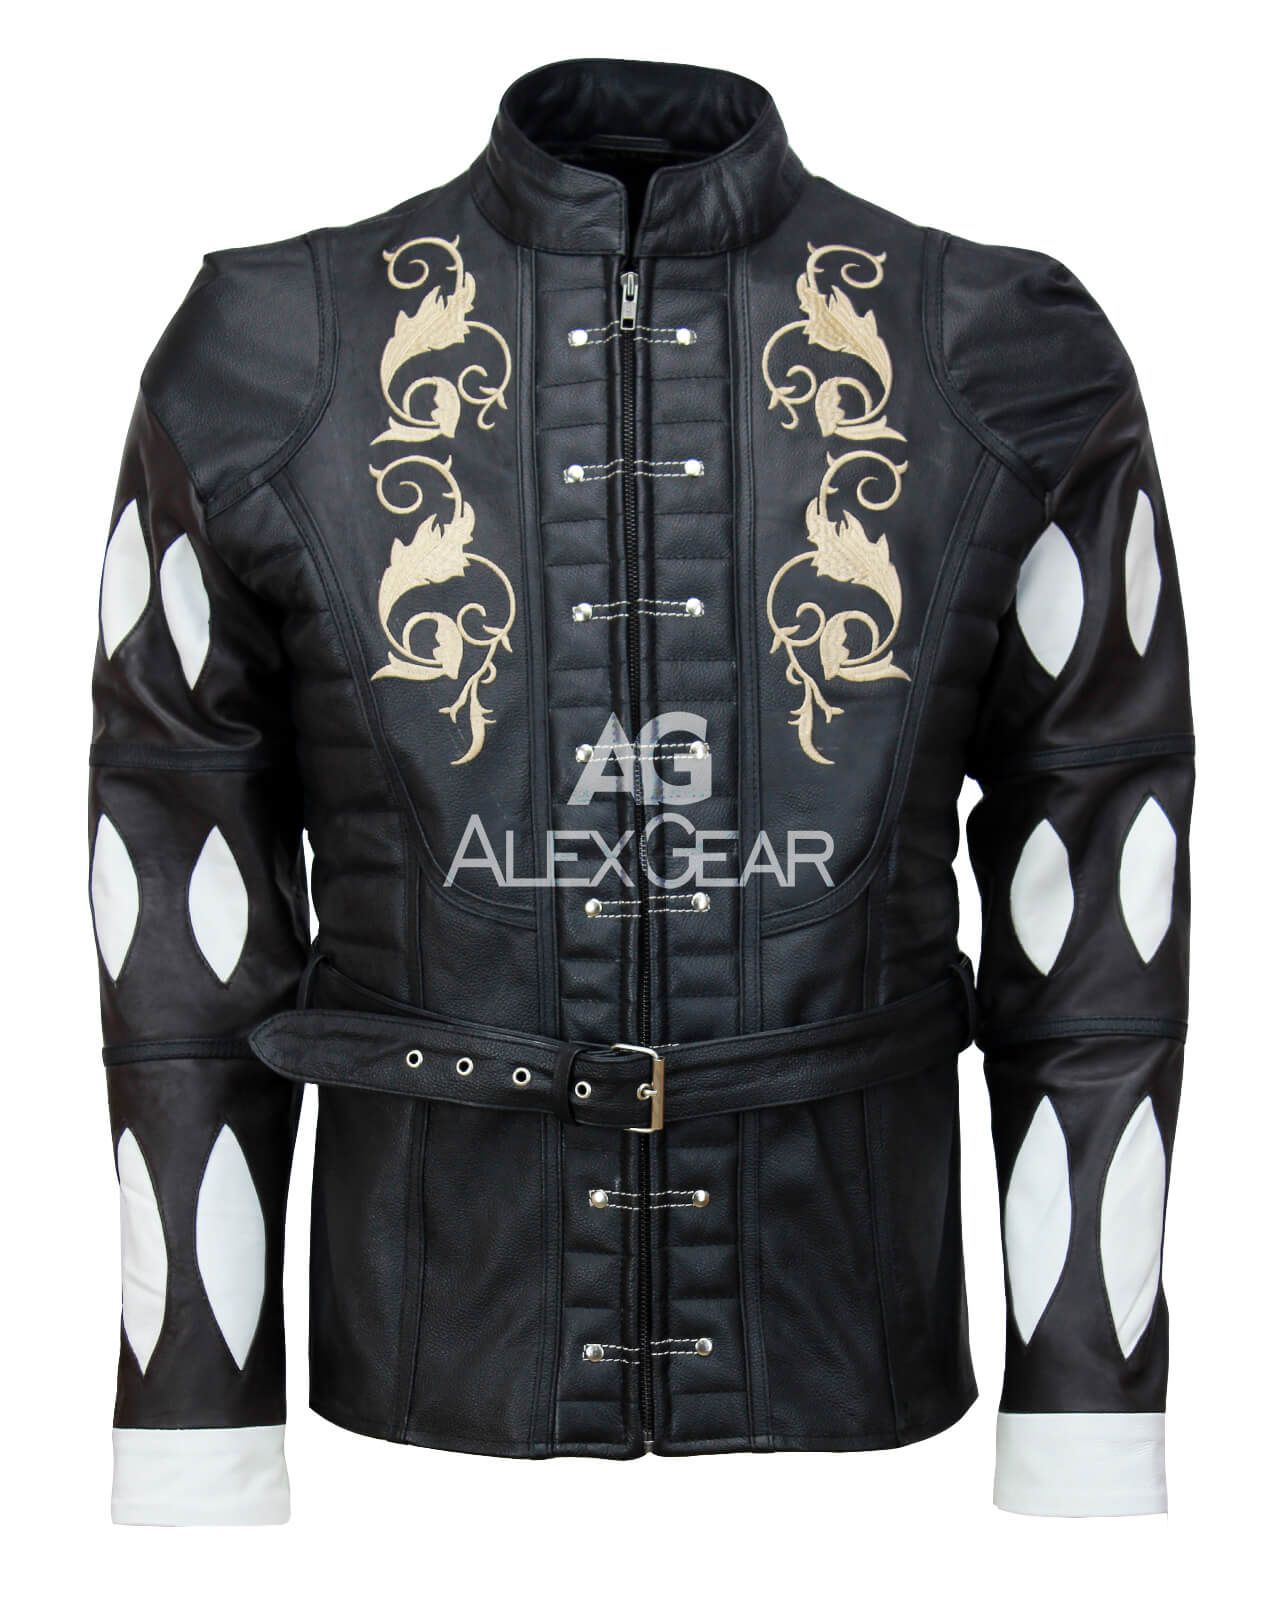 Baldur Gate 3 Astarion Cosplay Leather Jacket